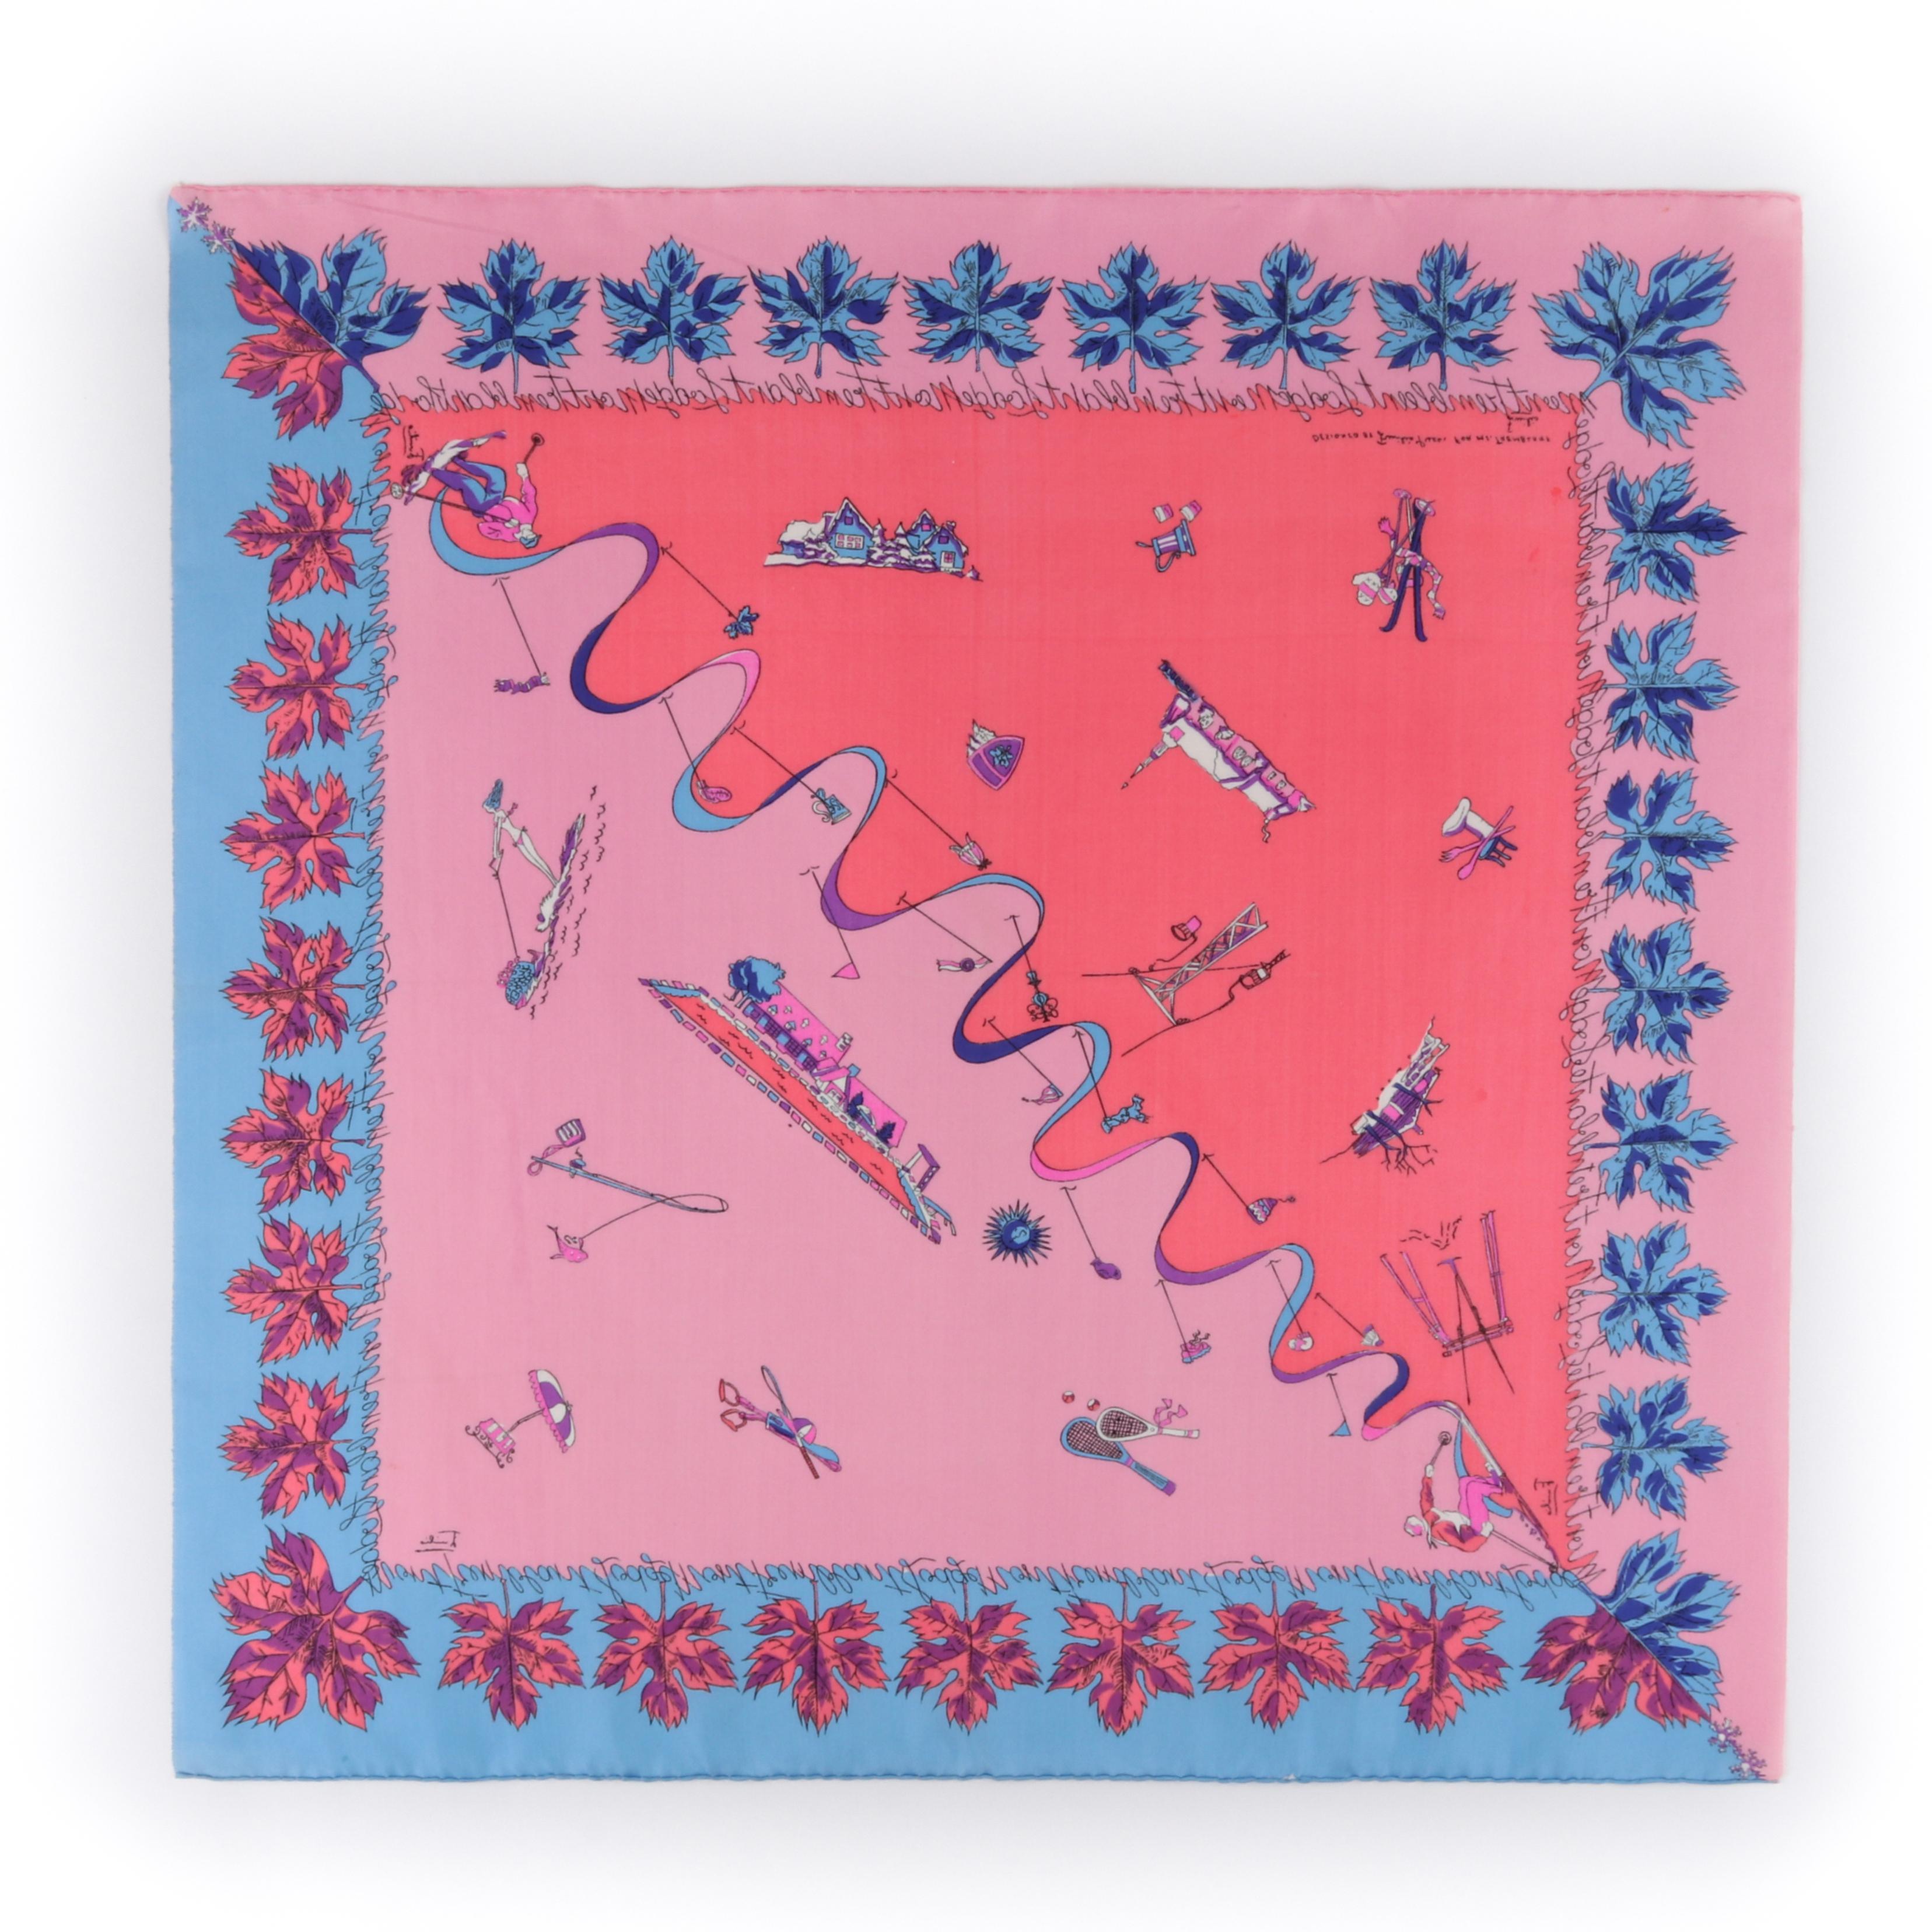 EMILIO PUCCI c.1950s Tremblant Lodge Ski & Beach Signature Silk Square Scarf
 
Circa: 1950’s
Brand / Manufacturer: Emilio Pucci
Designer: Emilio Pucci
Style: Square scarf
Color(s): Shades of pink, blue 
Unmarked Fabric Content: Silk 
Additional